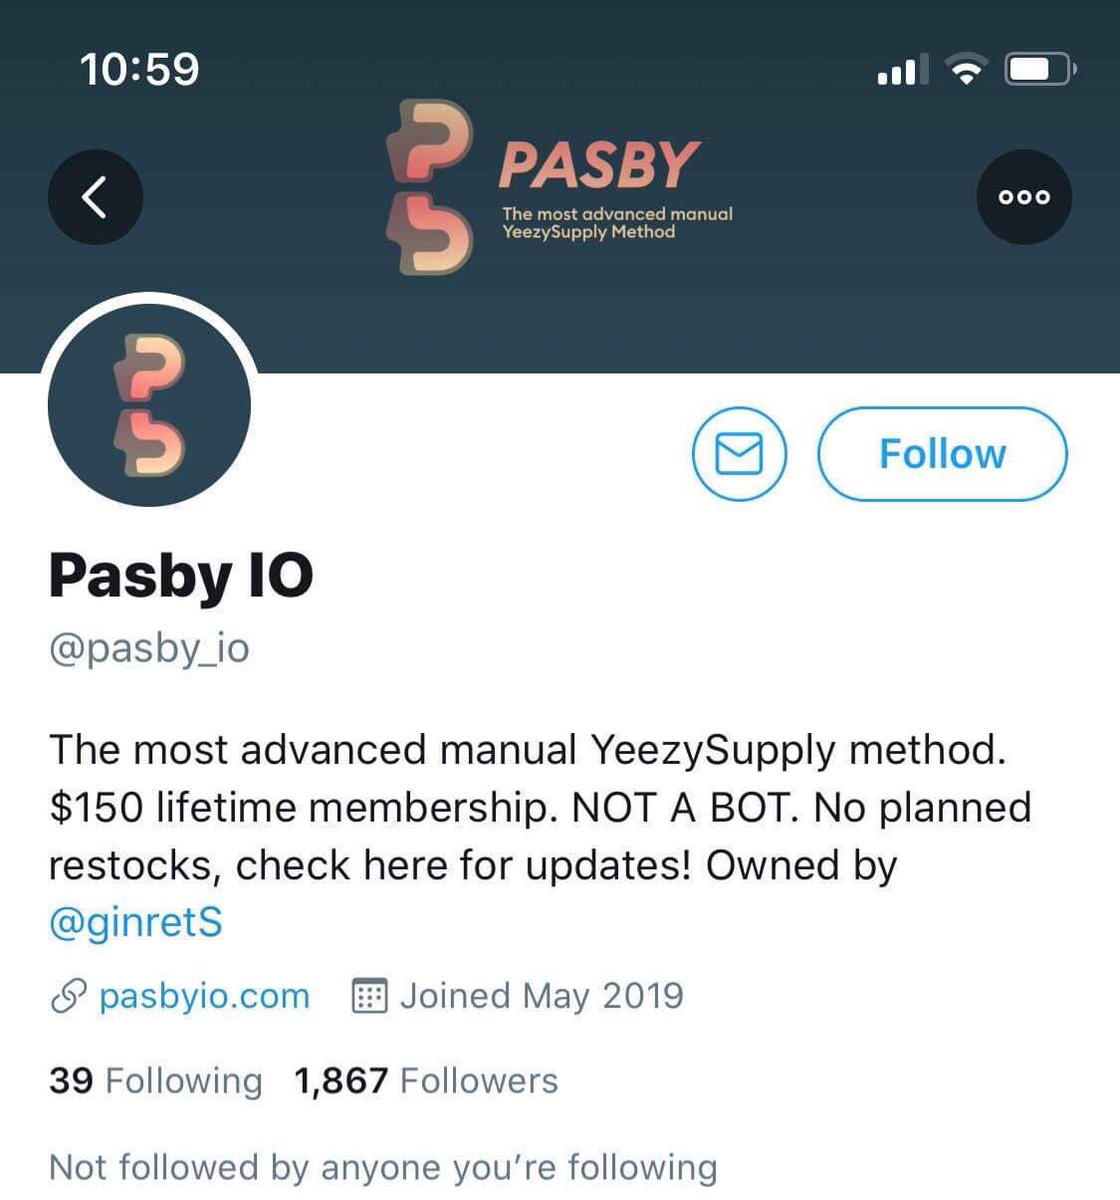 yeezy supply queue bypass 2019